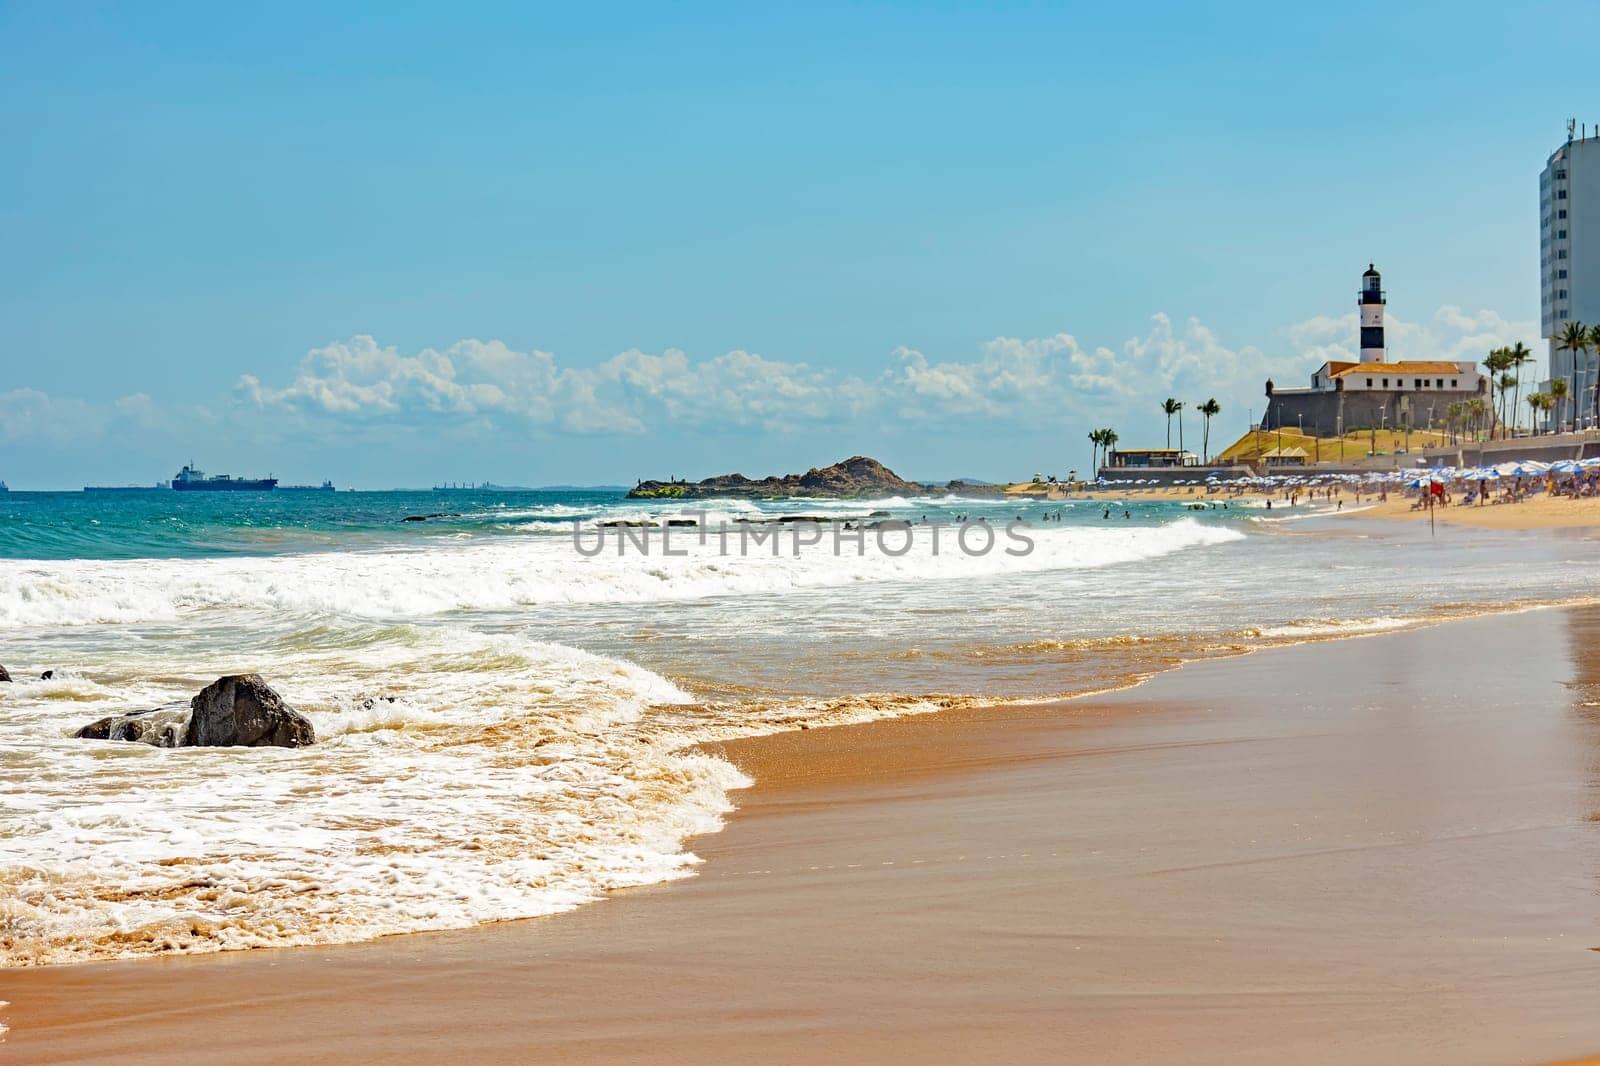 Barra beach buildings and lighthouse seen from afar with the summer sun of Salvador in Bahia